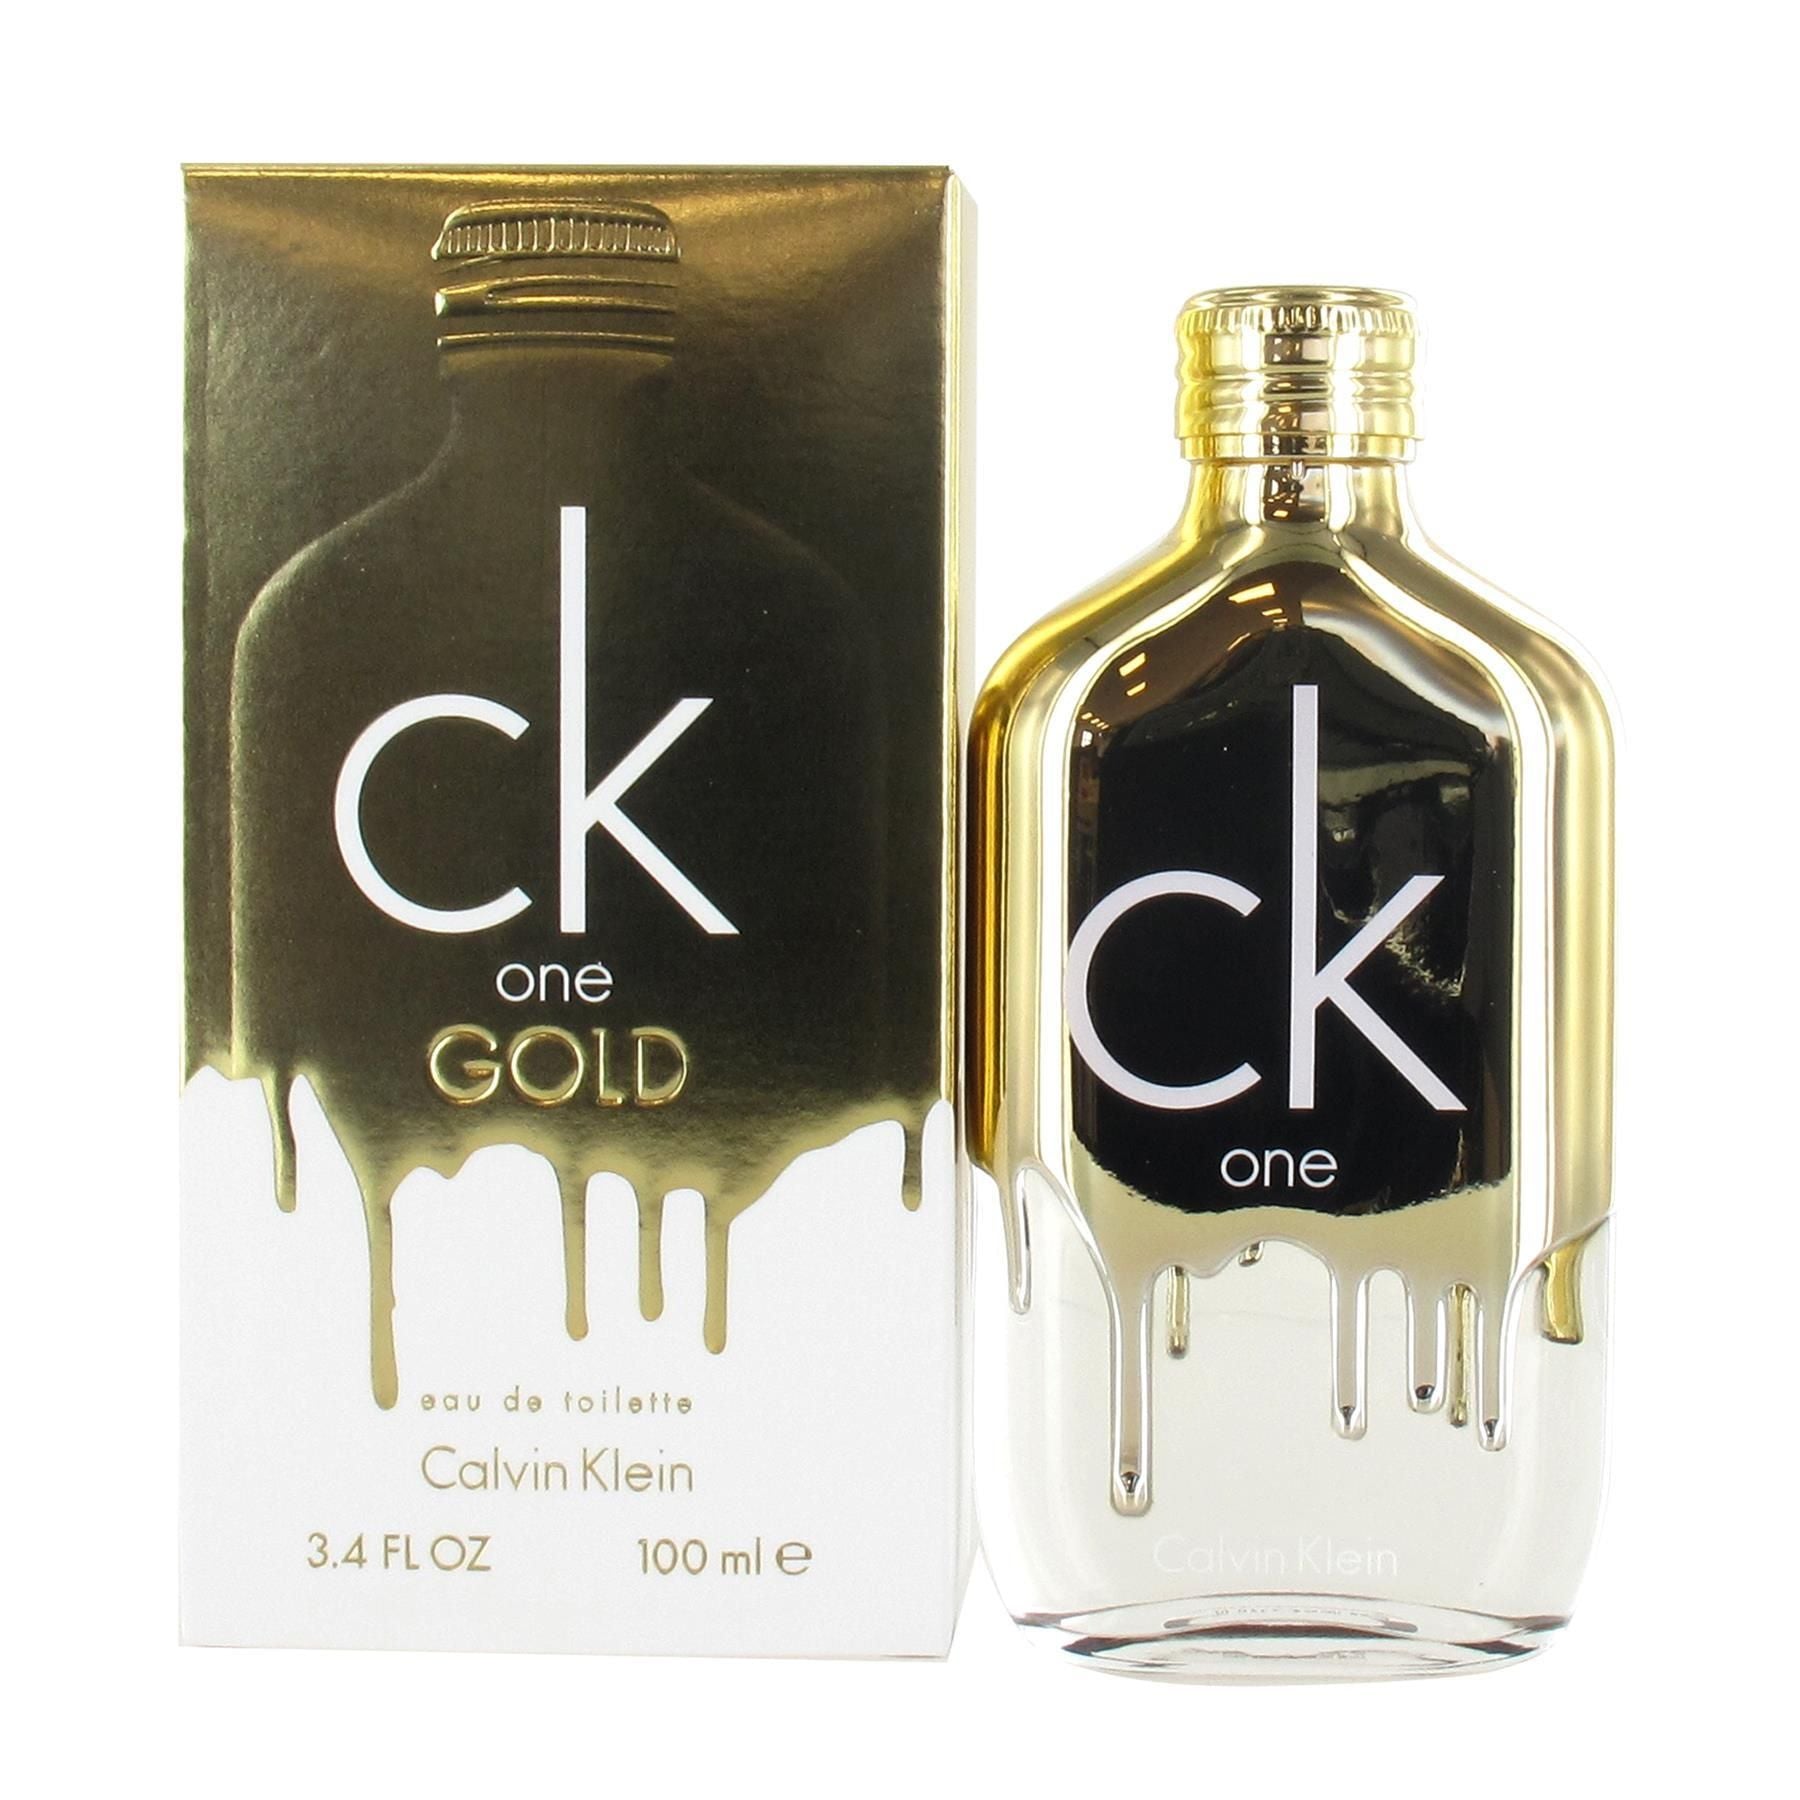 Calvin Klein CK one GOLD 100ml 新品未開封 - ユニセックス